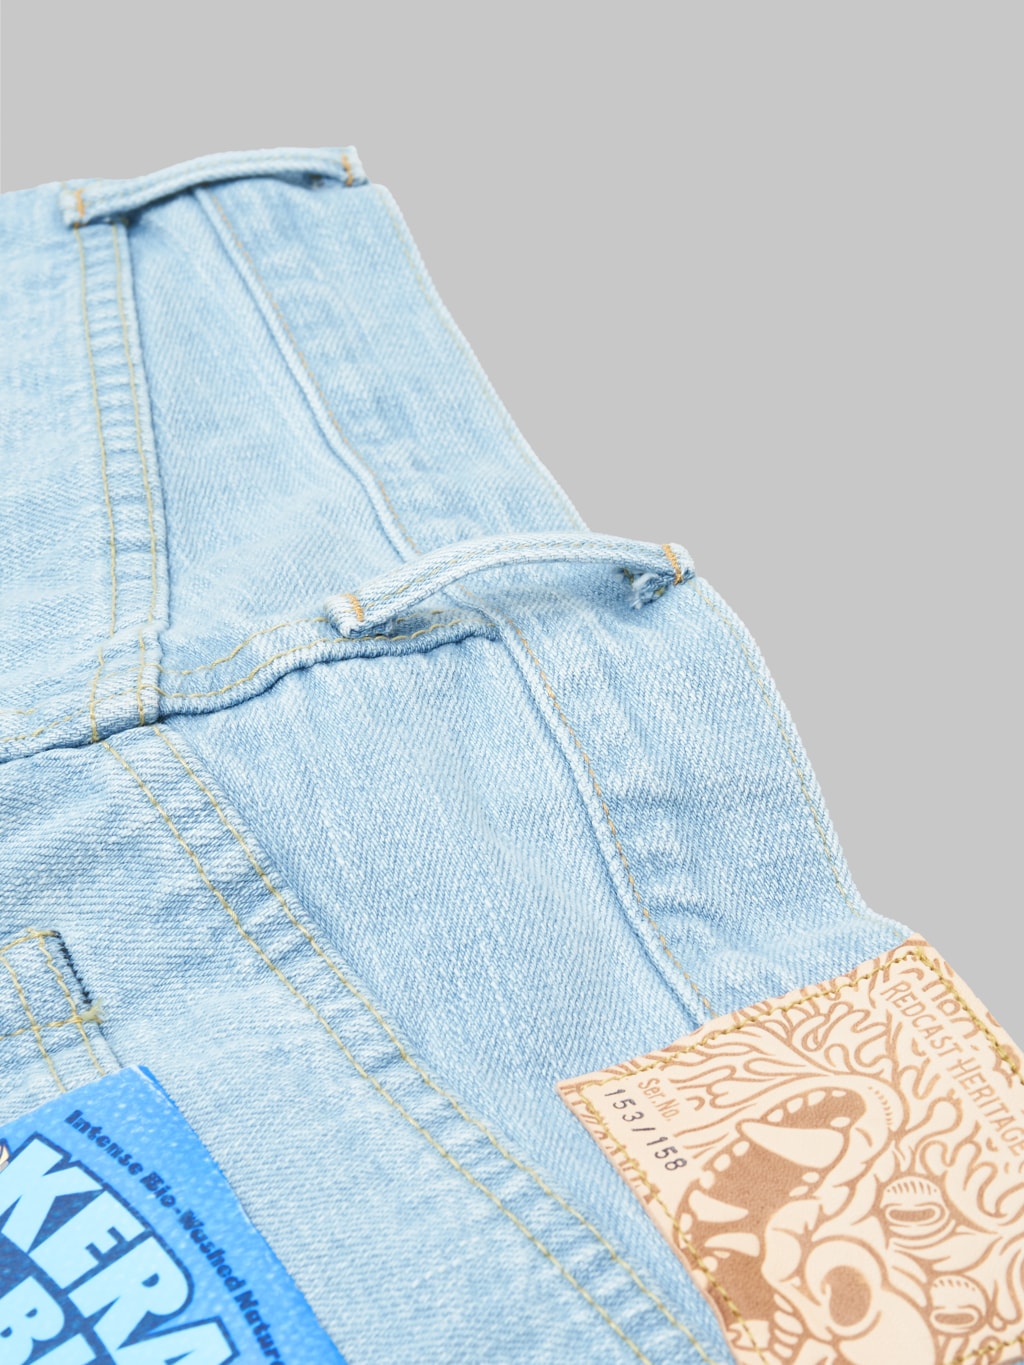 redcast heritage x oni denim kerama blue 15oz selvedge jeans belt loop